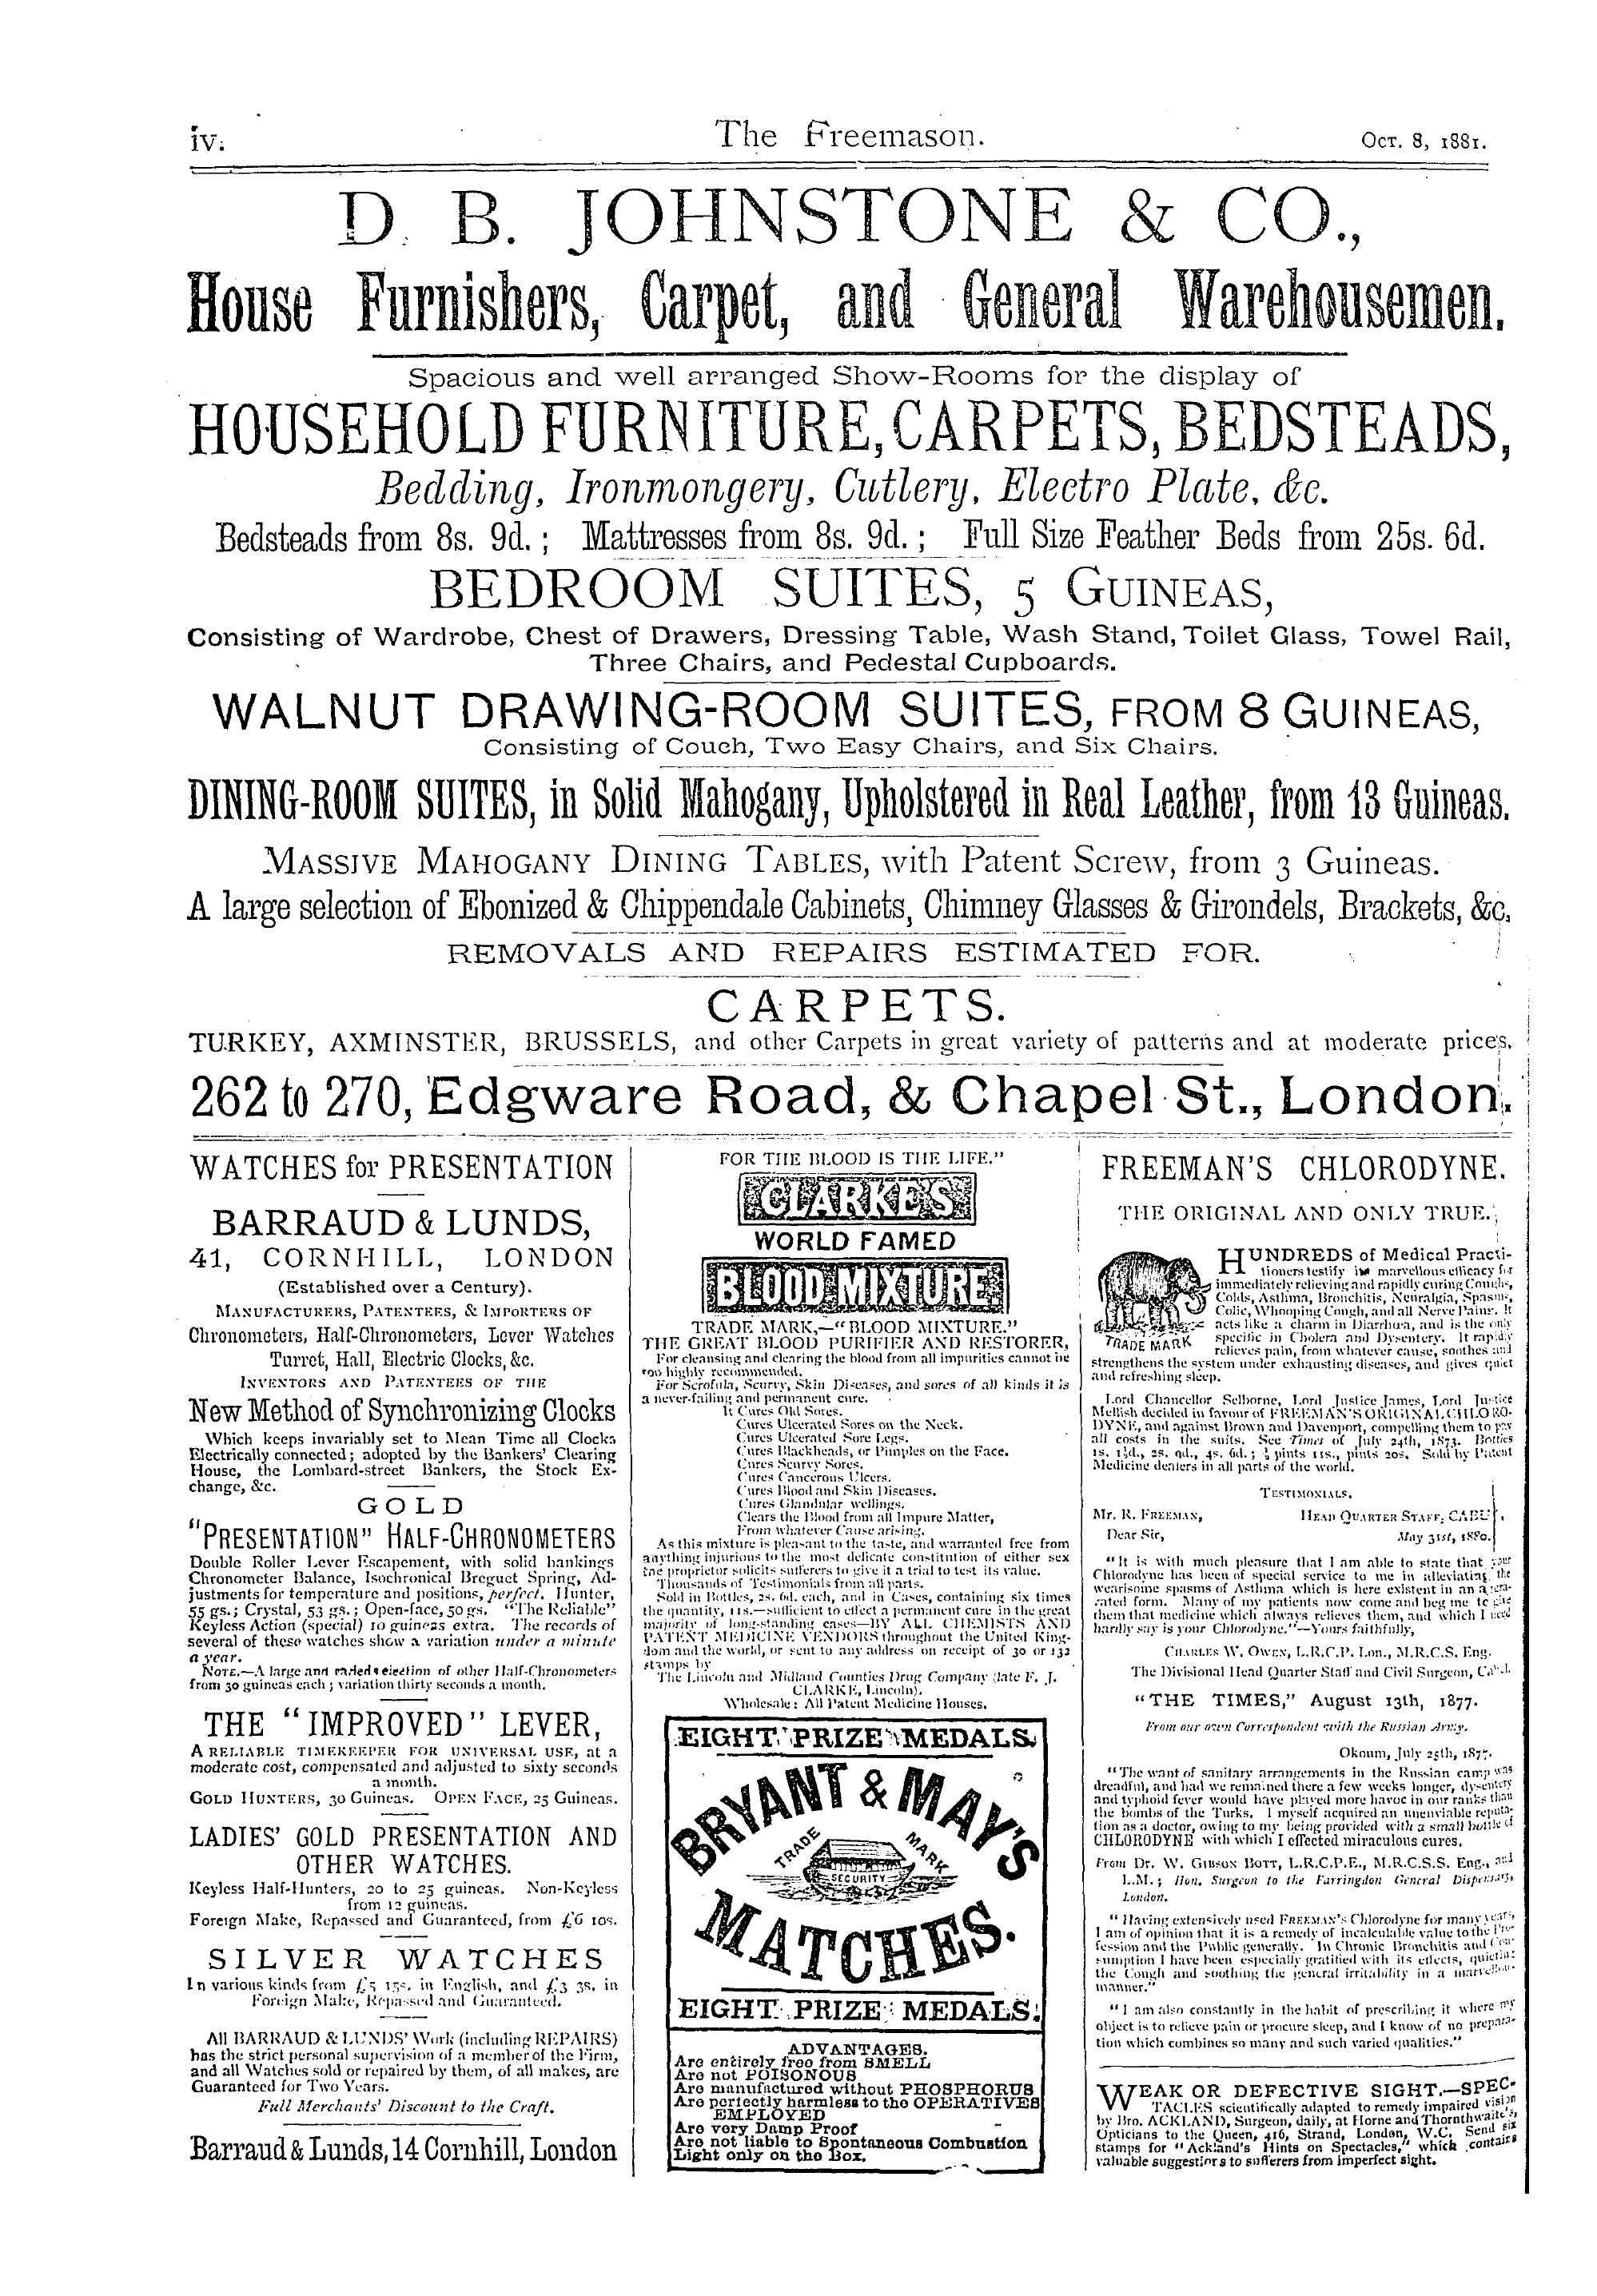 The Freemason: 1881-10-08 - Ad01202